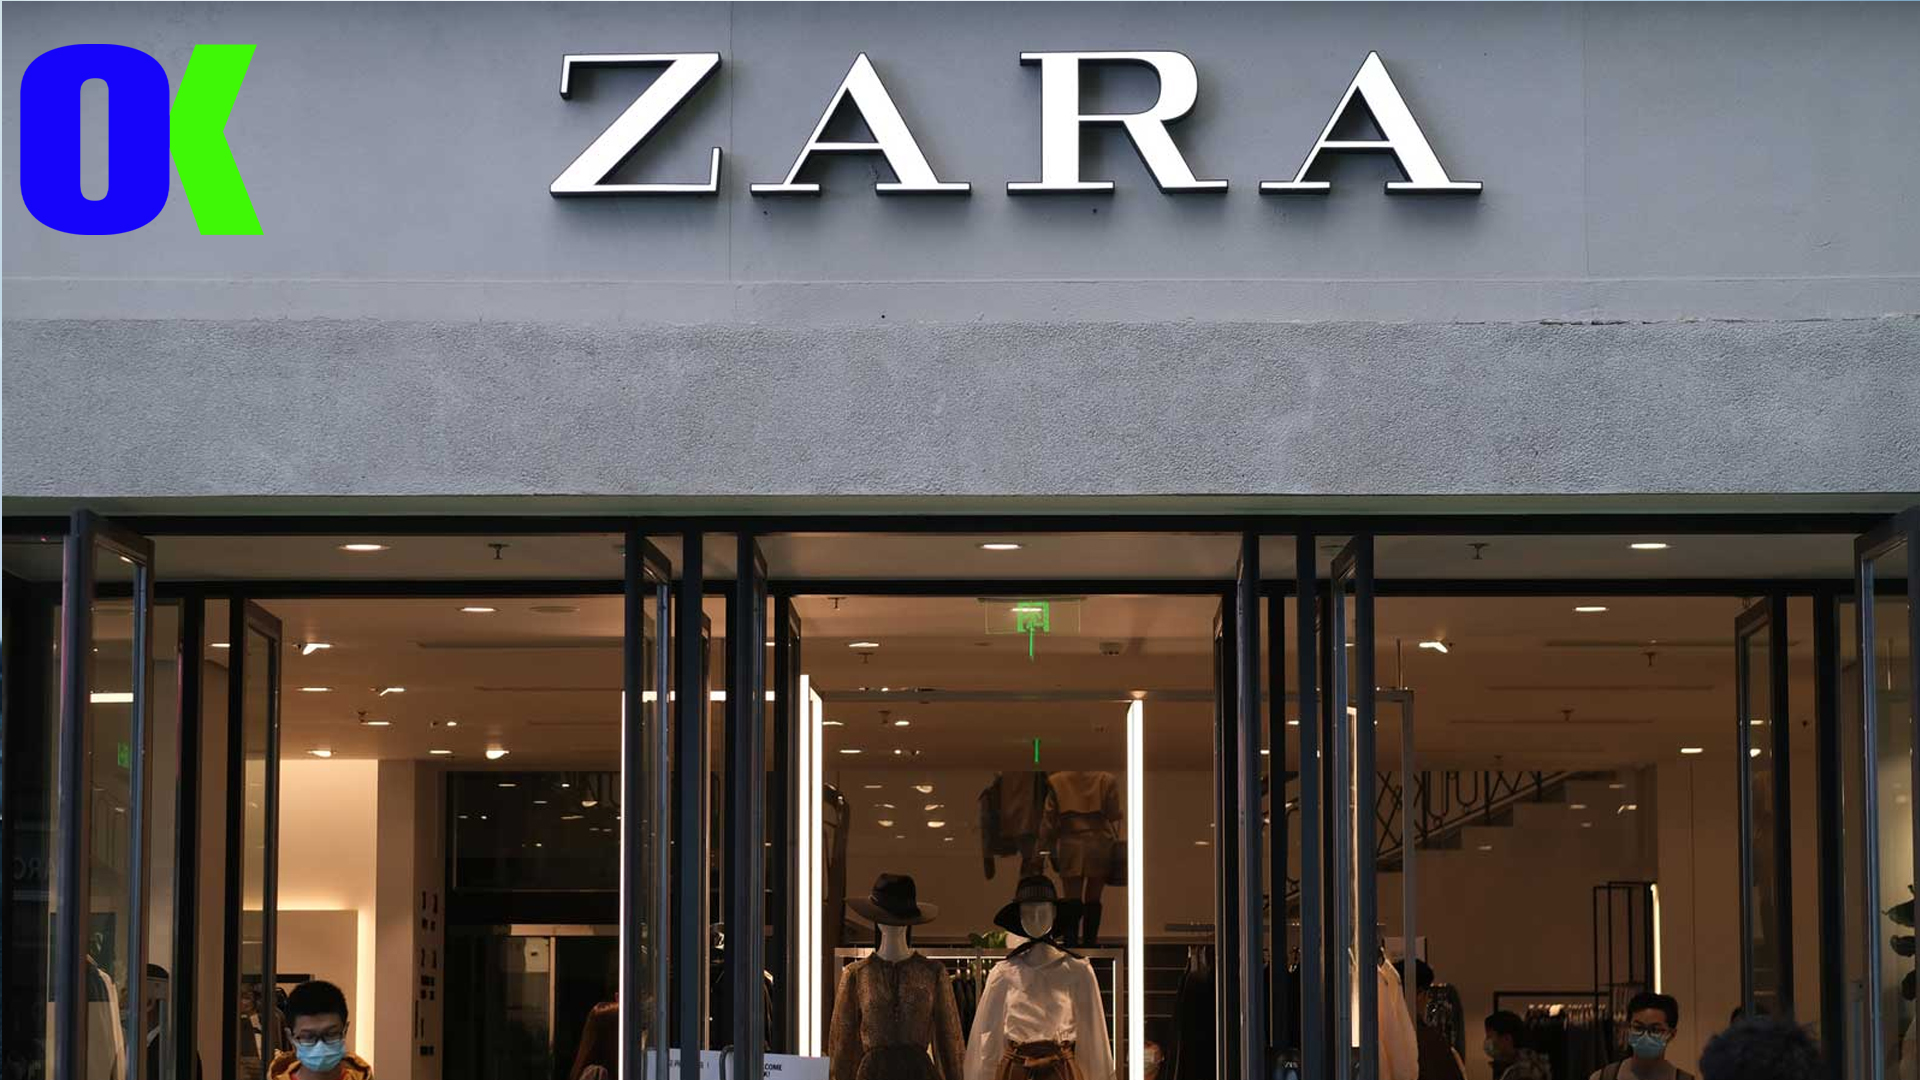 Zara owner's profit fell by 70 percent